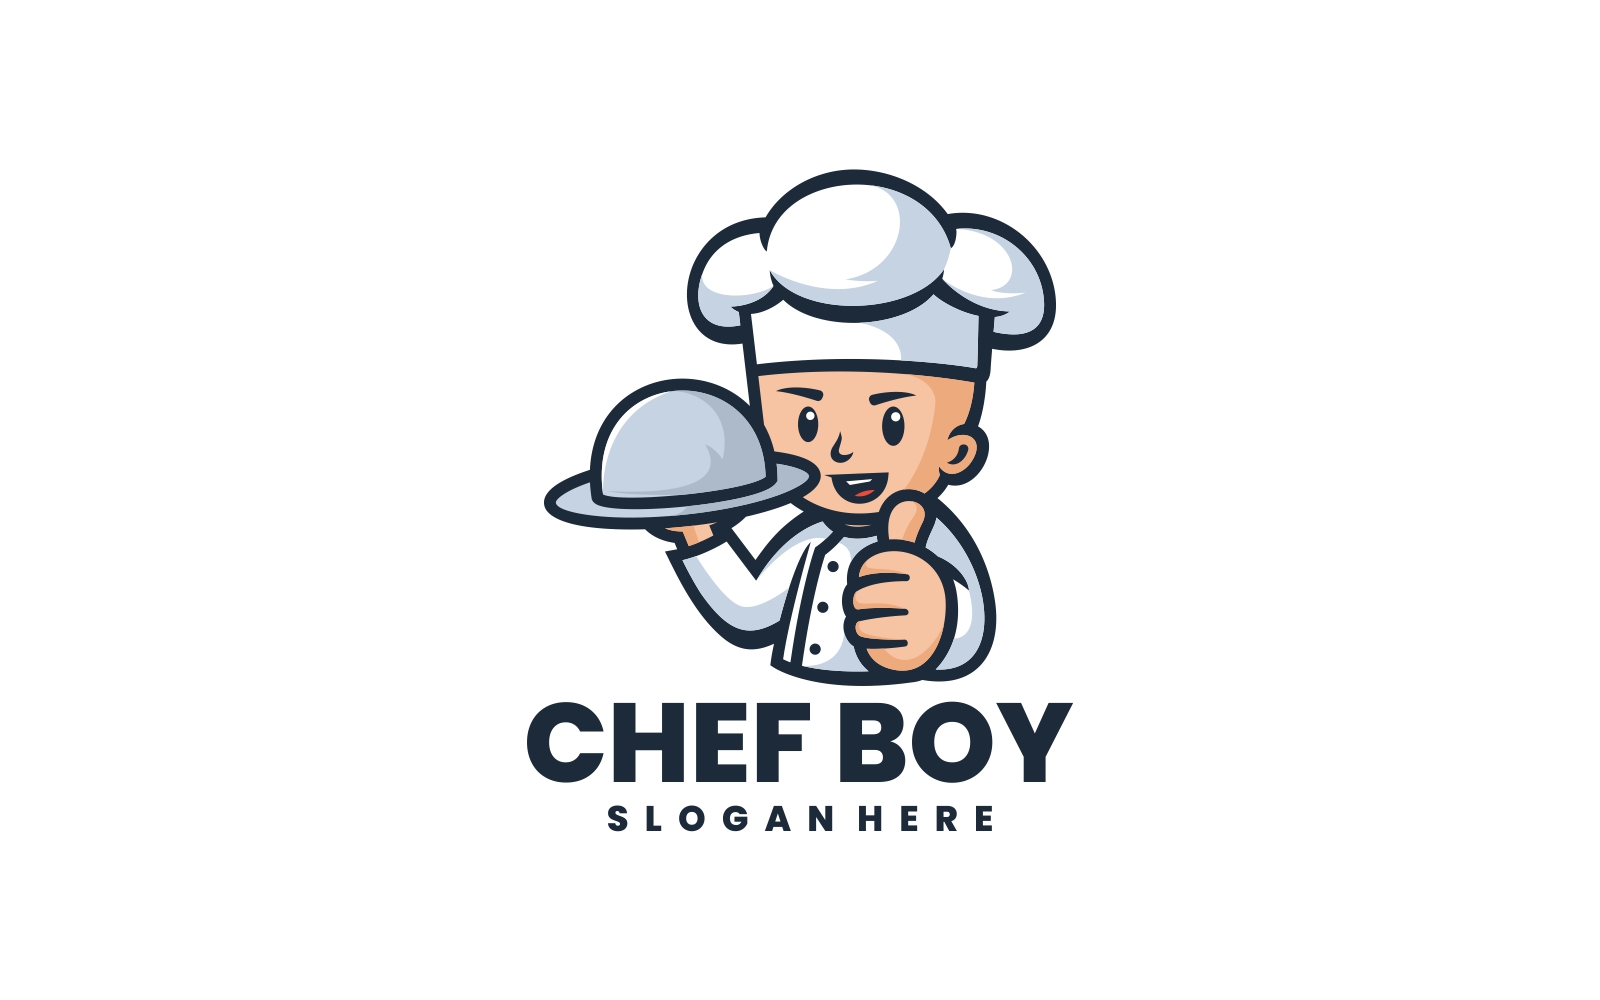 Boy Logo Maker | Create Boy logos in minutes